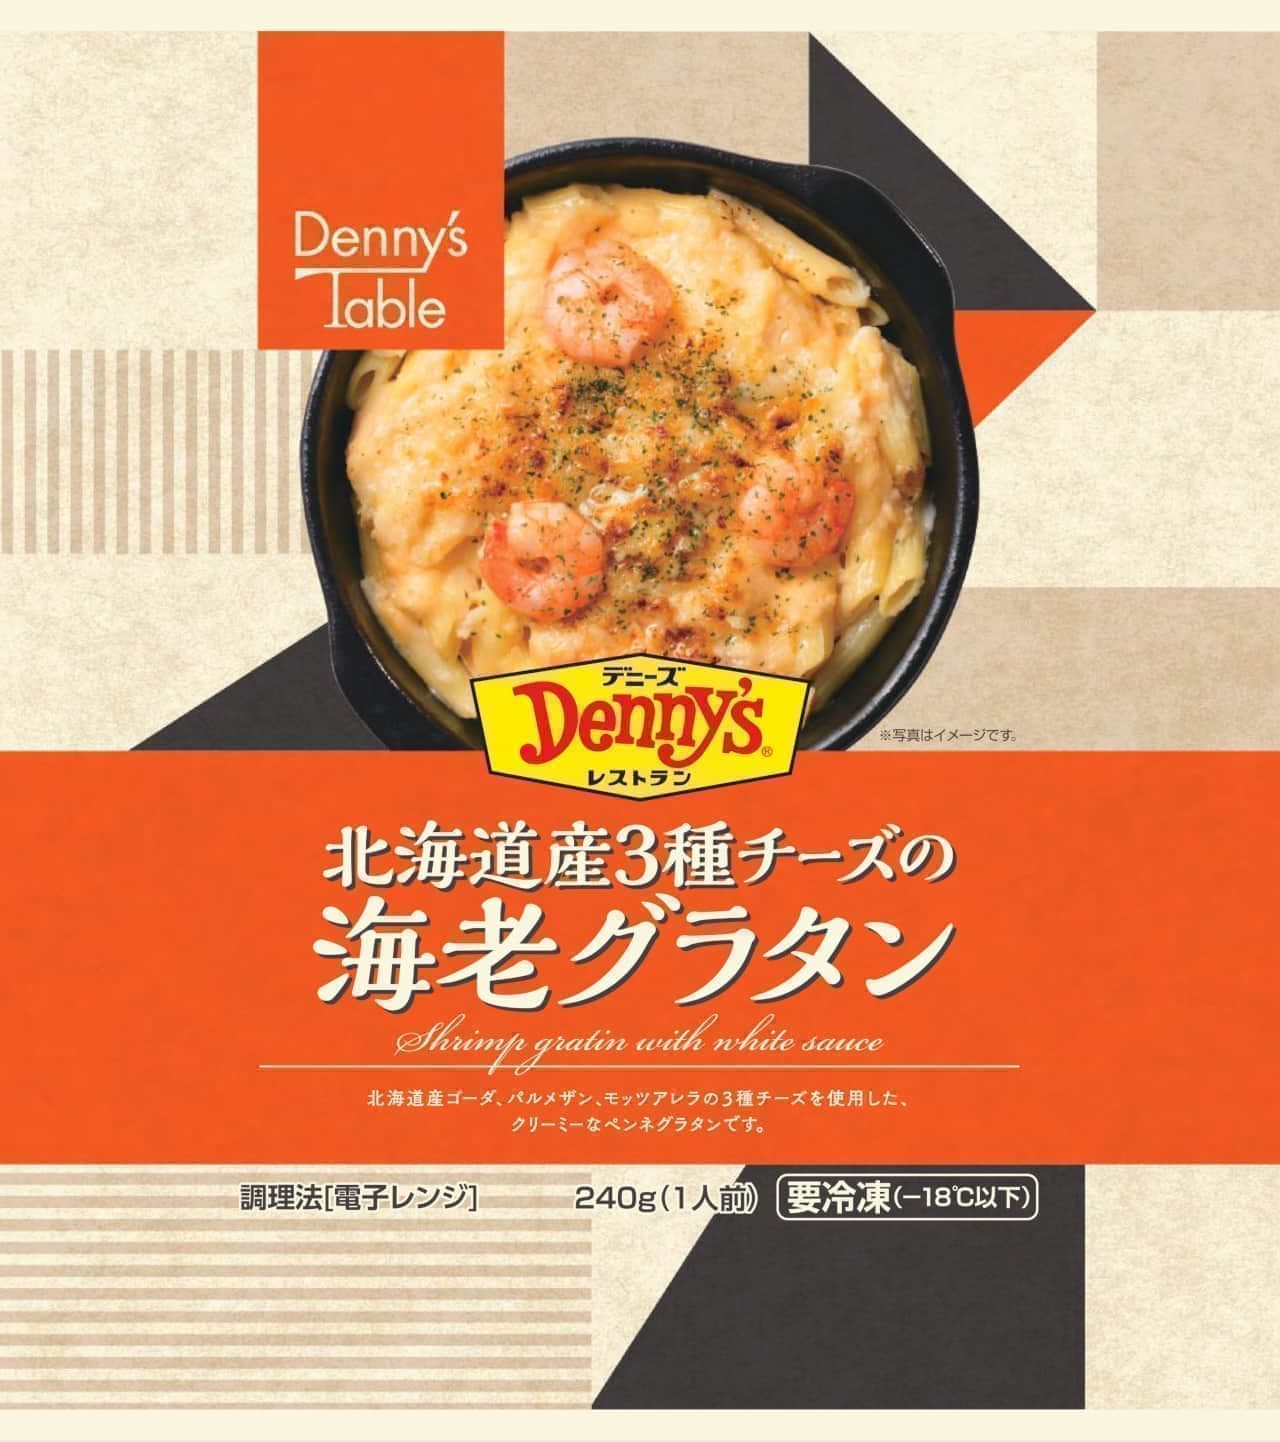 Denny's "Shrimp au gratin with three kinds of cheese from Hokkaido